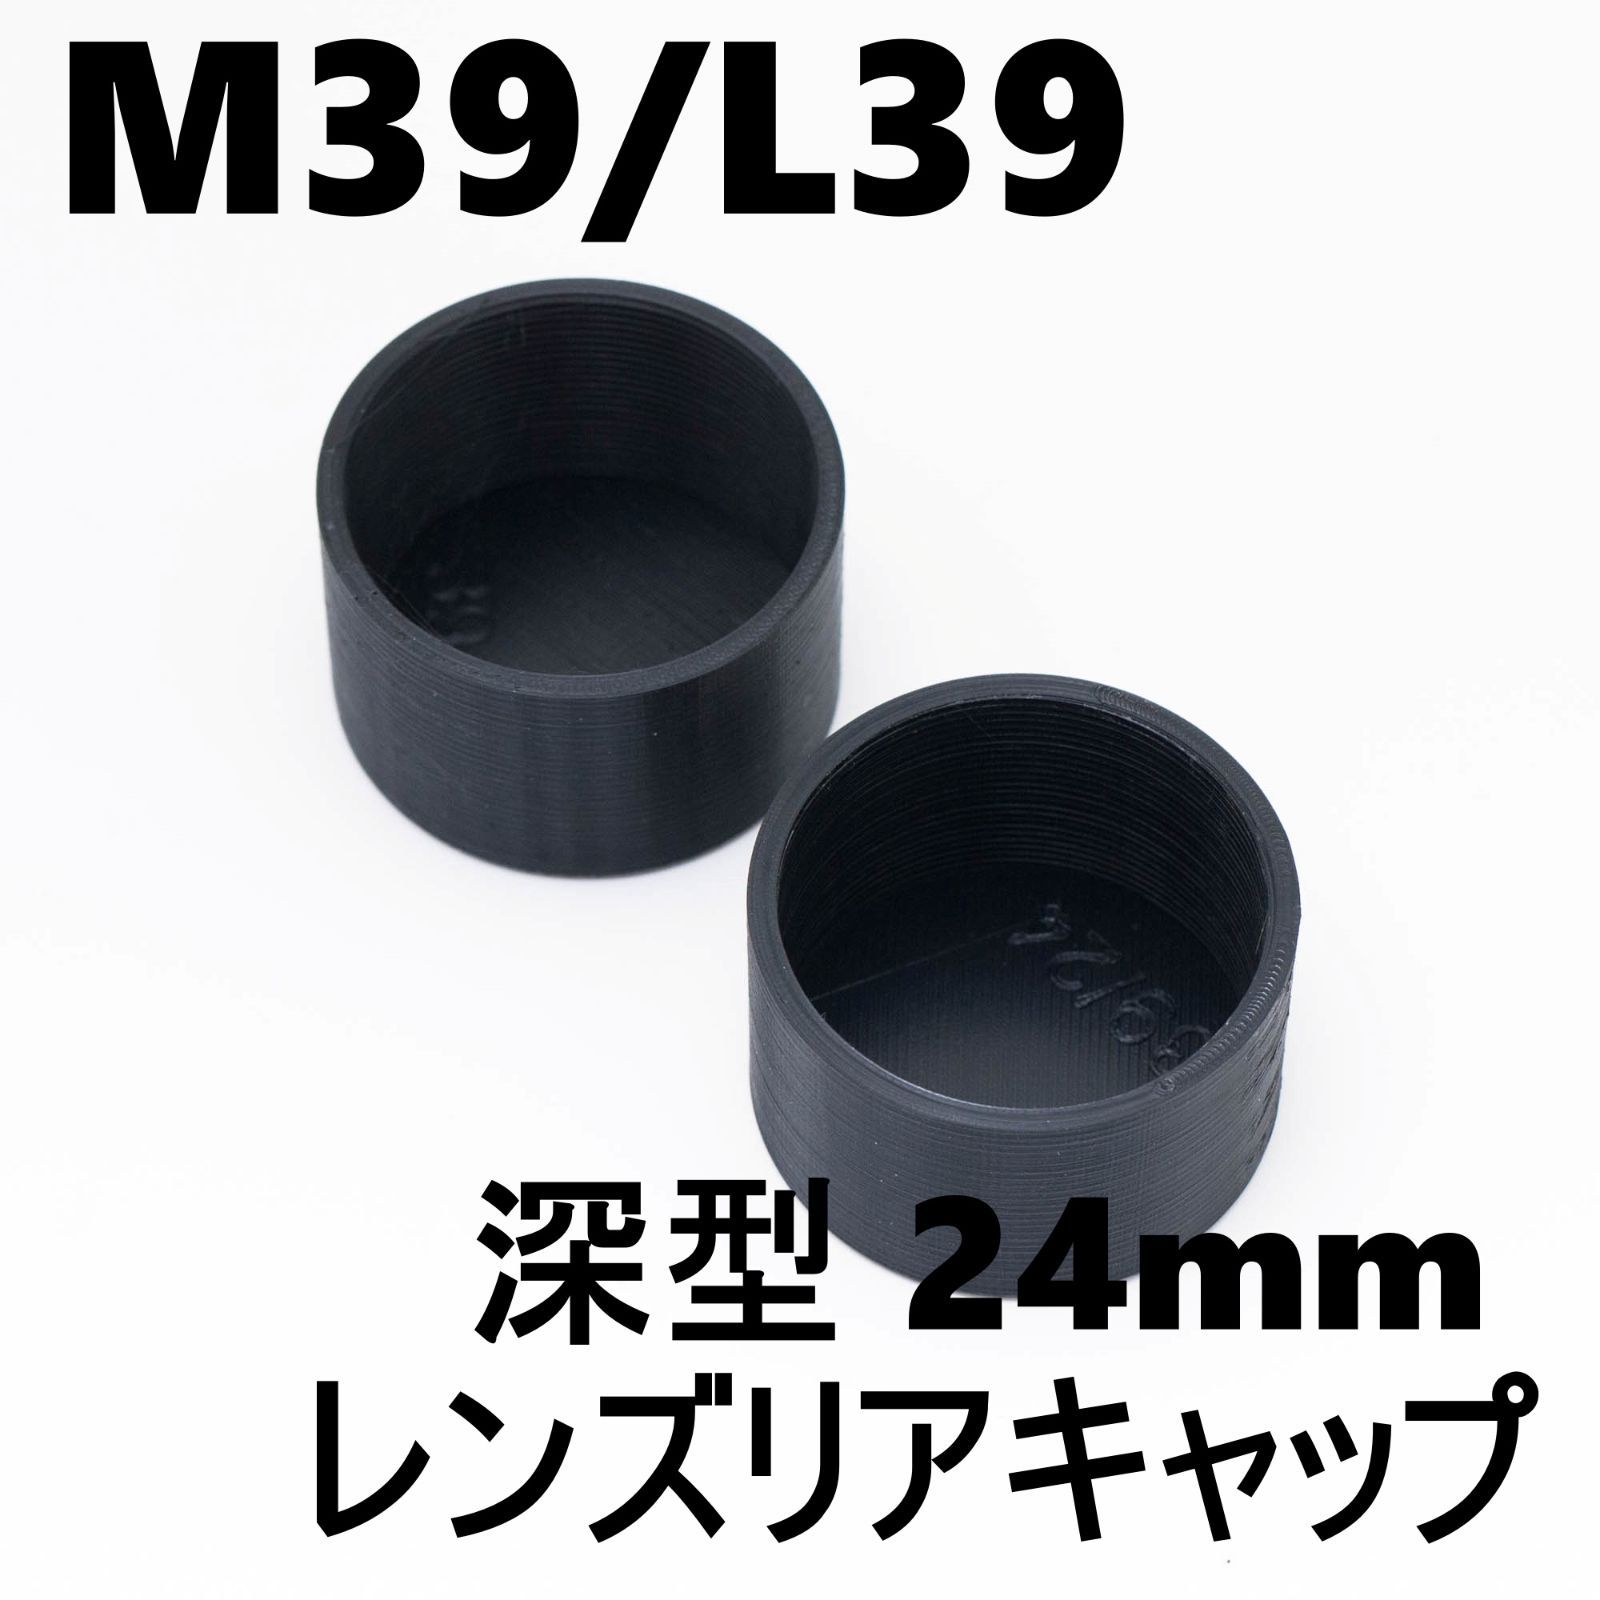 M39 L39 深型 レンズリアキャップ 二個セット ねじキャップ